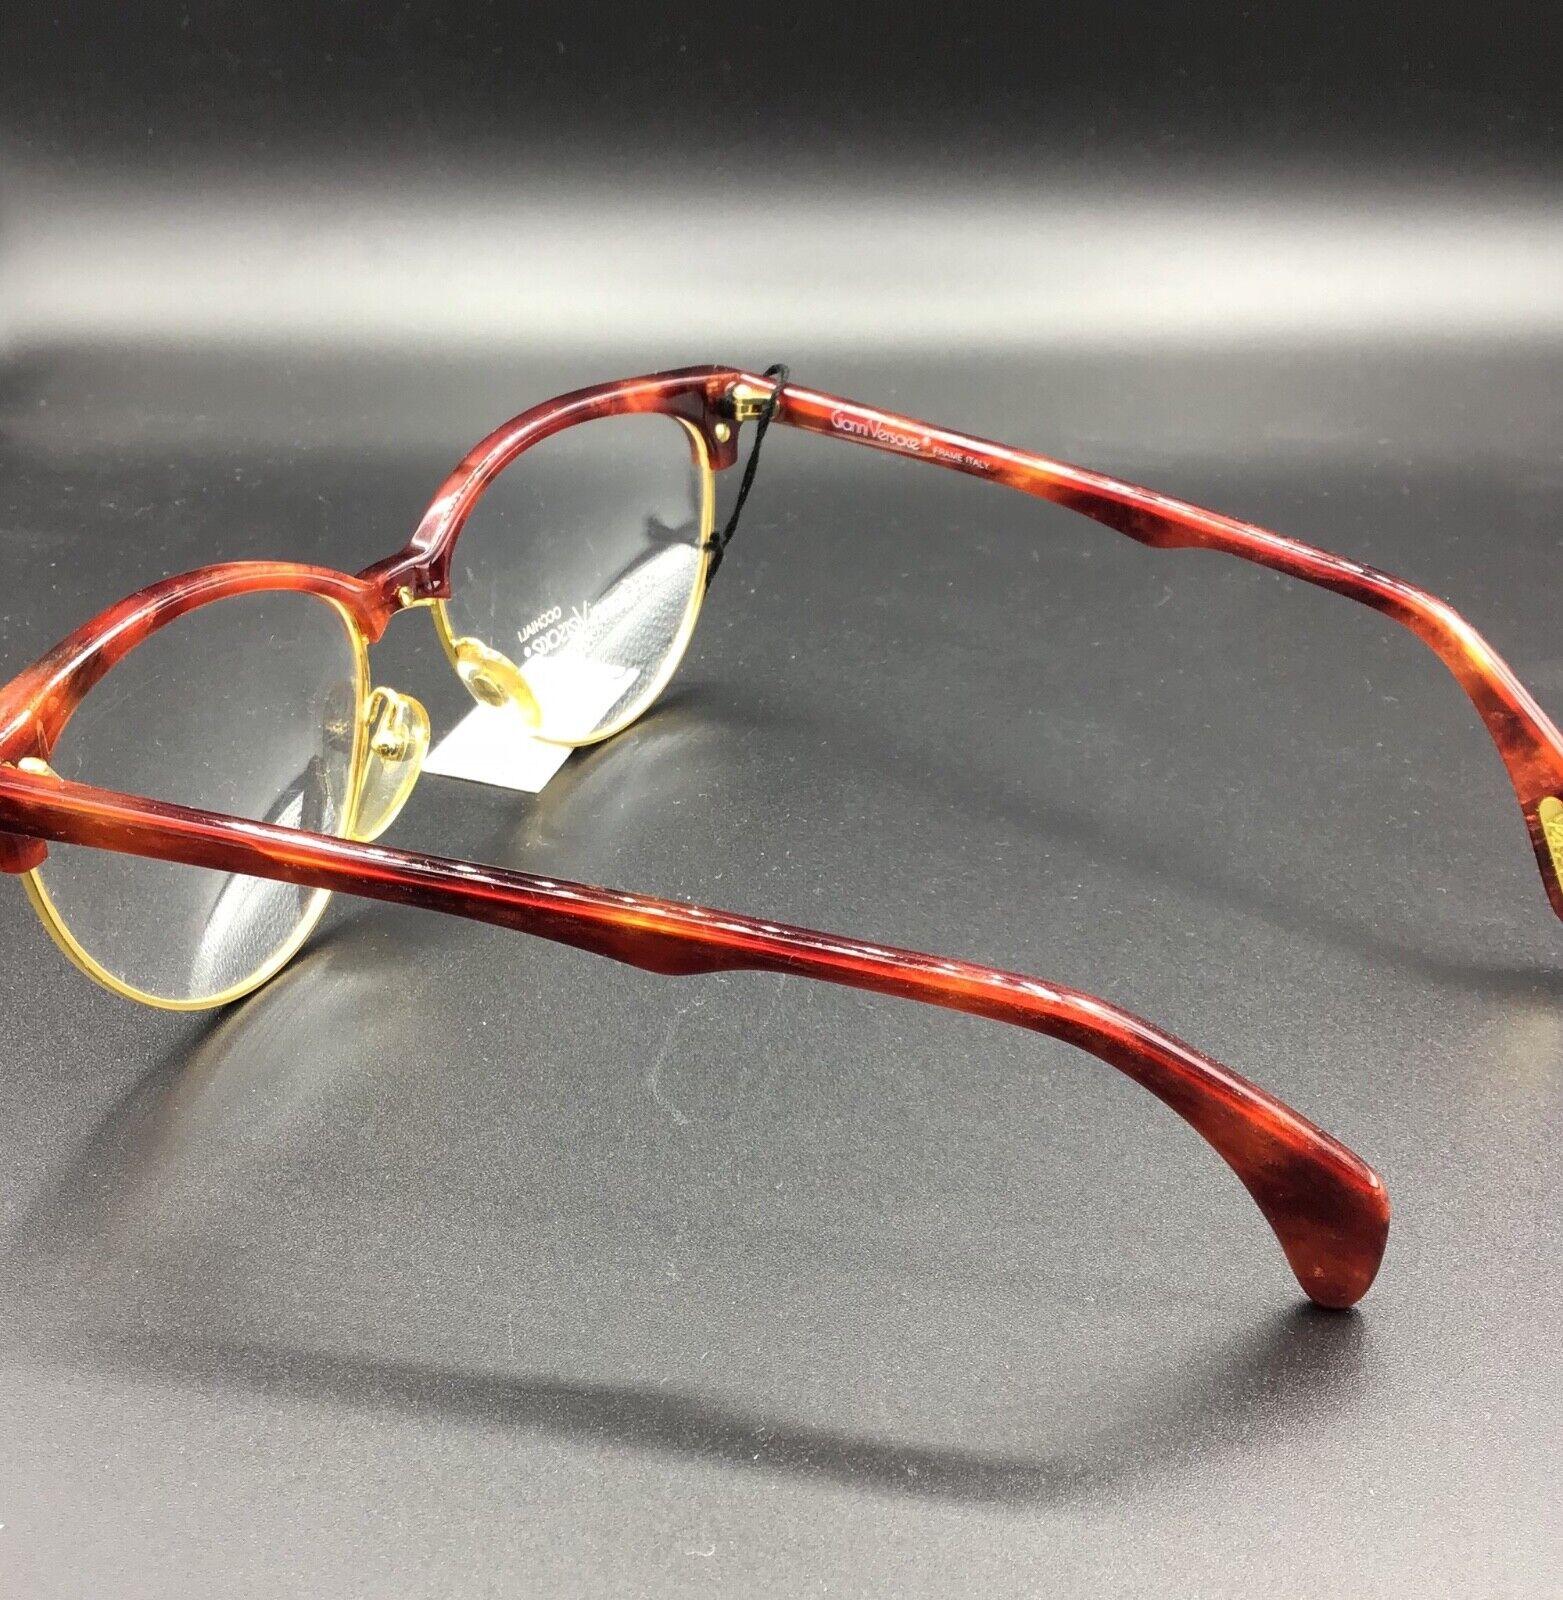 Gianni Versace occhiale vintage Eyewear frame Italy model 468. Col 927 glasses